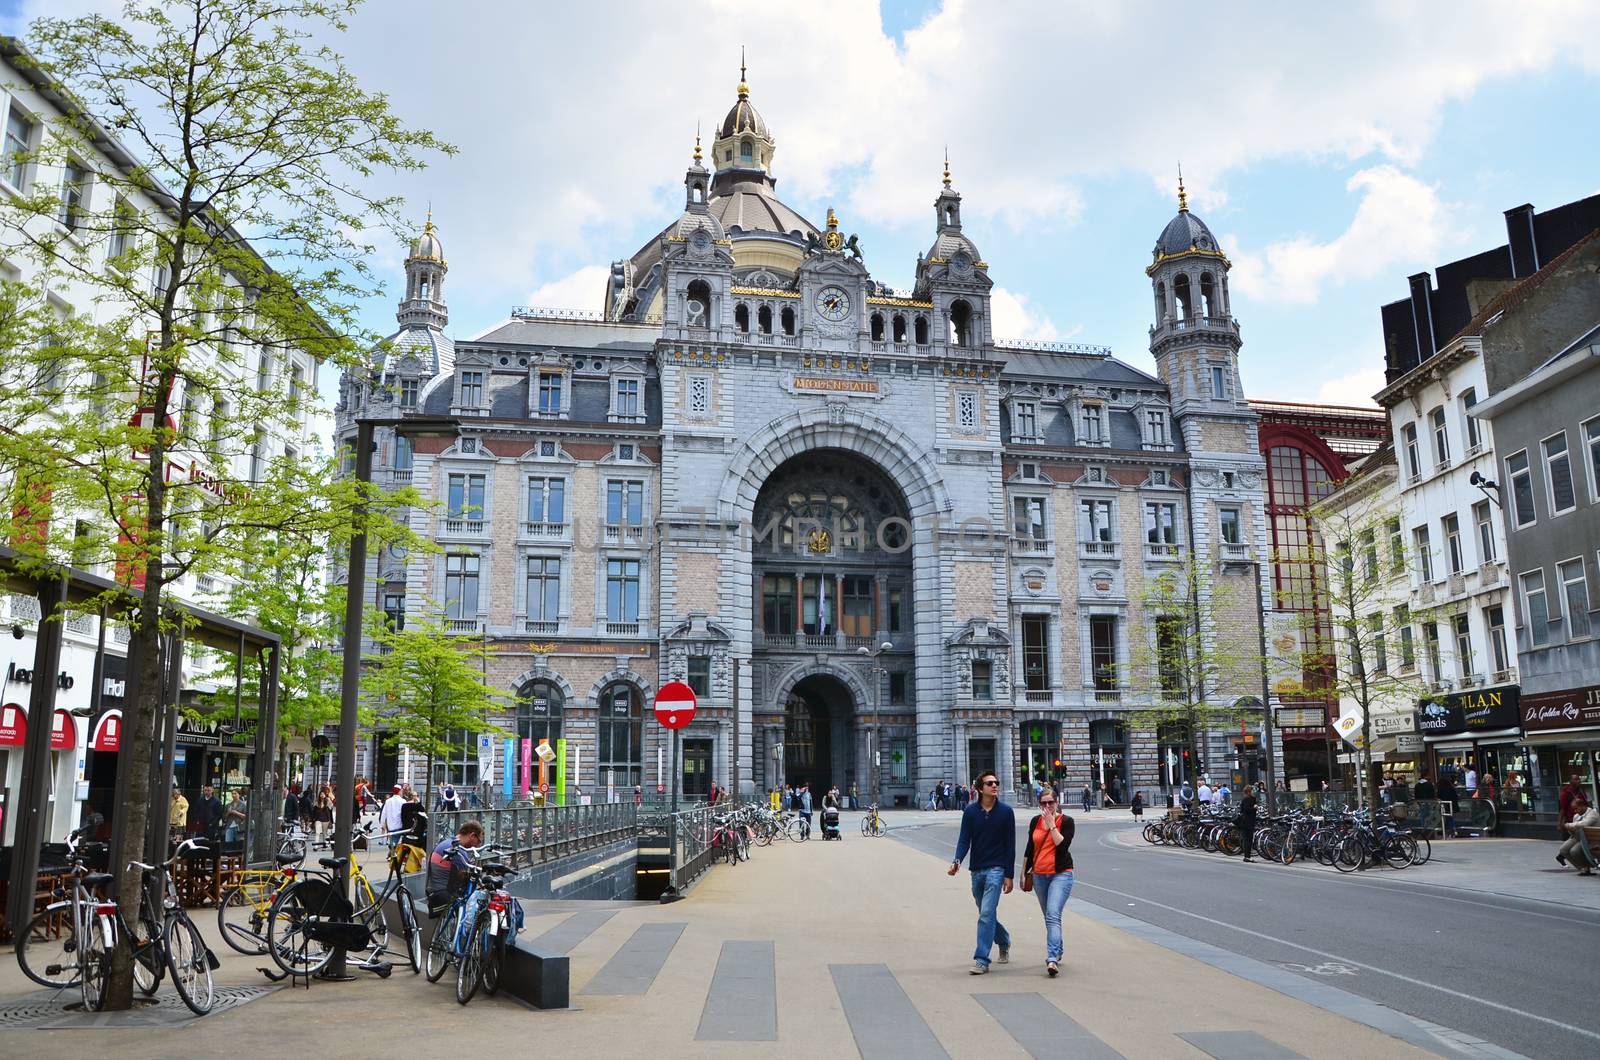 Antwerp, Belgium - May 11, 2015: People around Antwerp main railway station on  May 11, 2015 in Antwerp, Belgium. The original station building was constructed between 1895 and 1905.